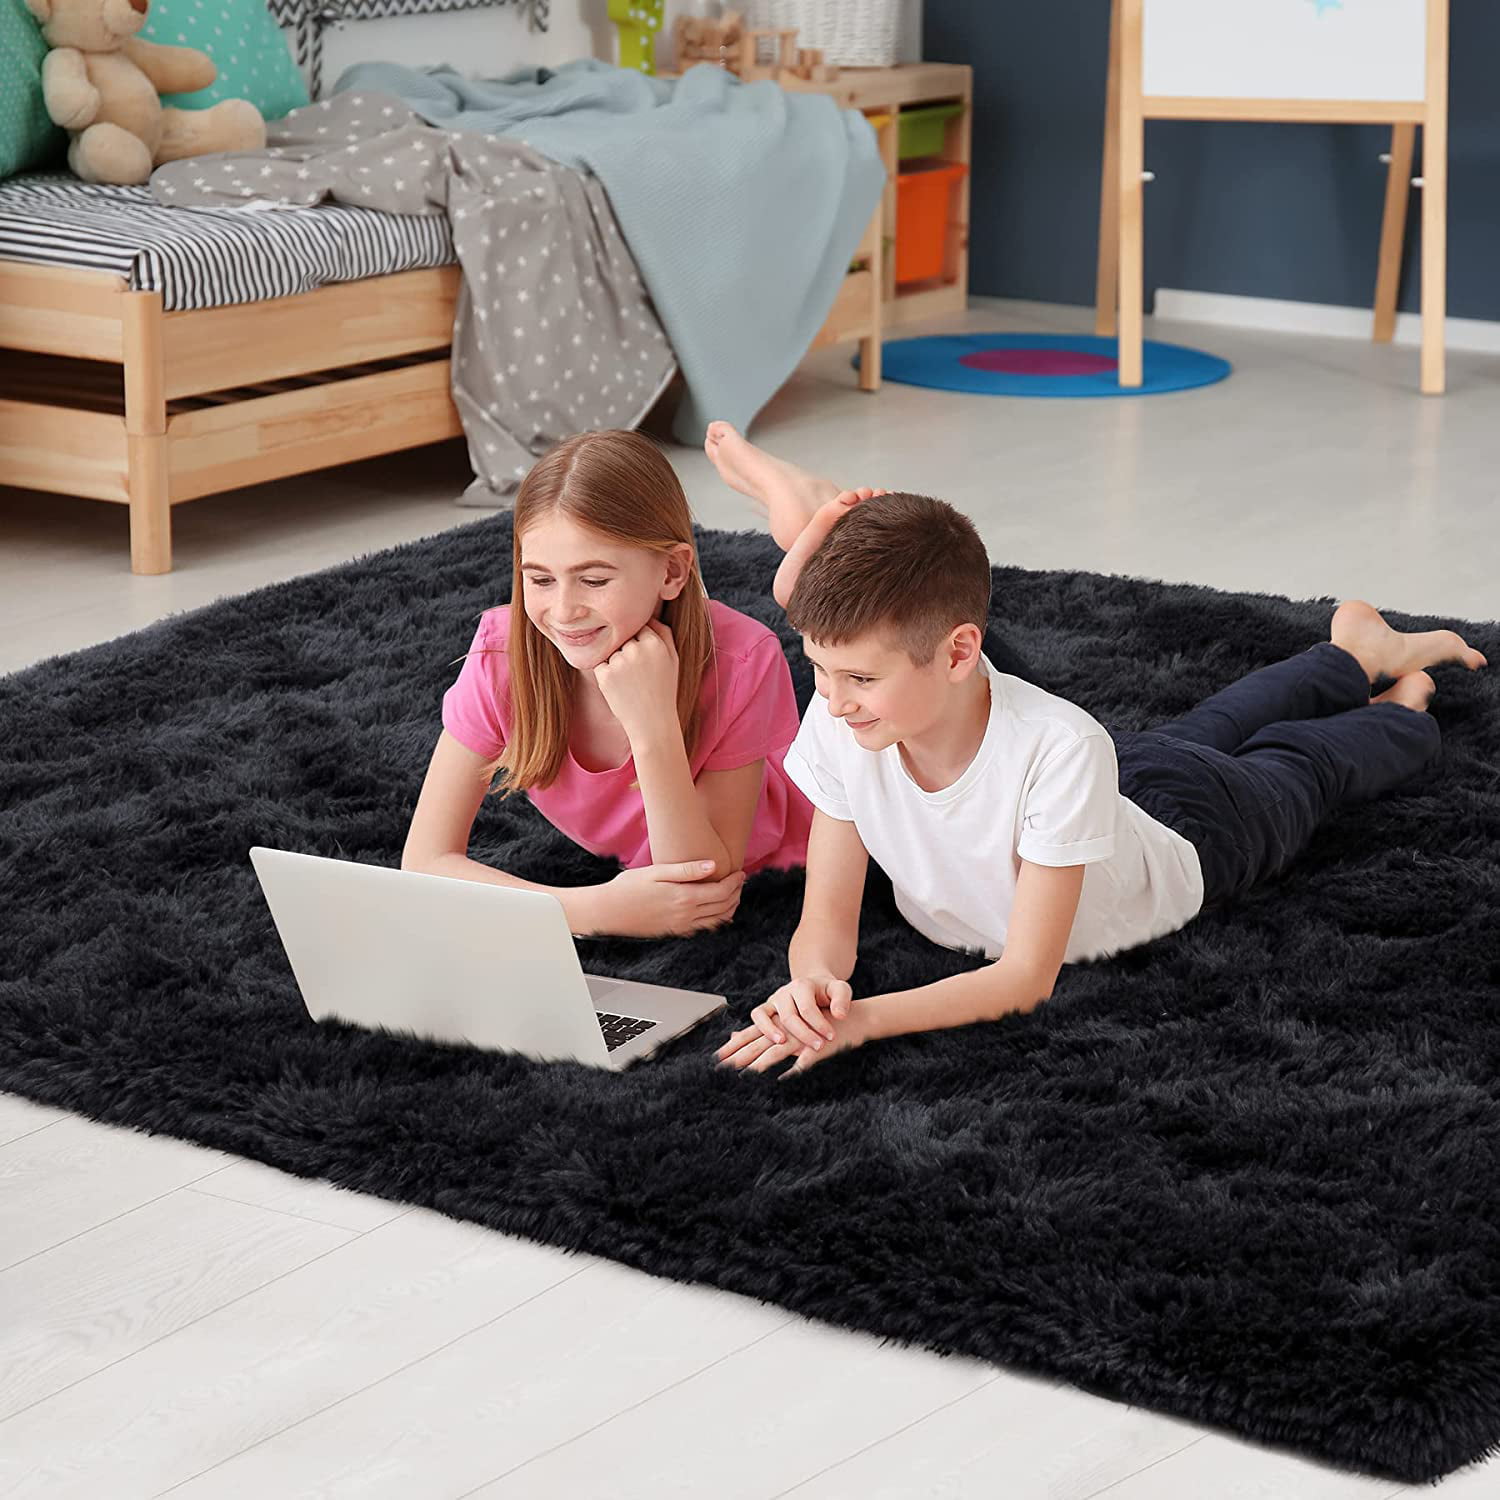 TWINNIS Super Soft Shaggy Rugs Fluffy Carpets, 4x5.9 Feet, Indoor